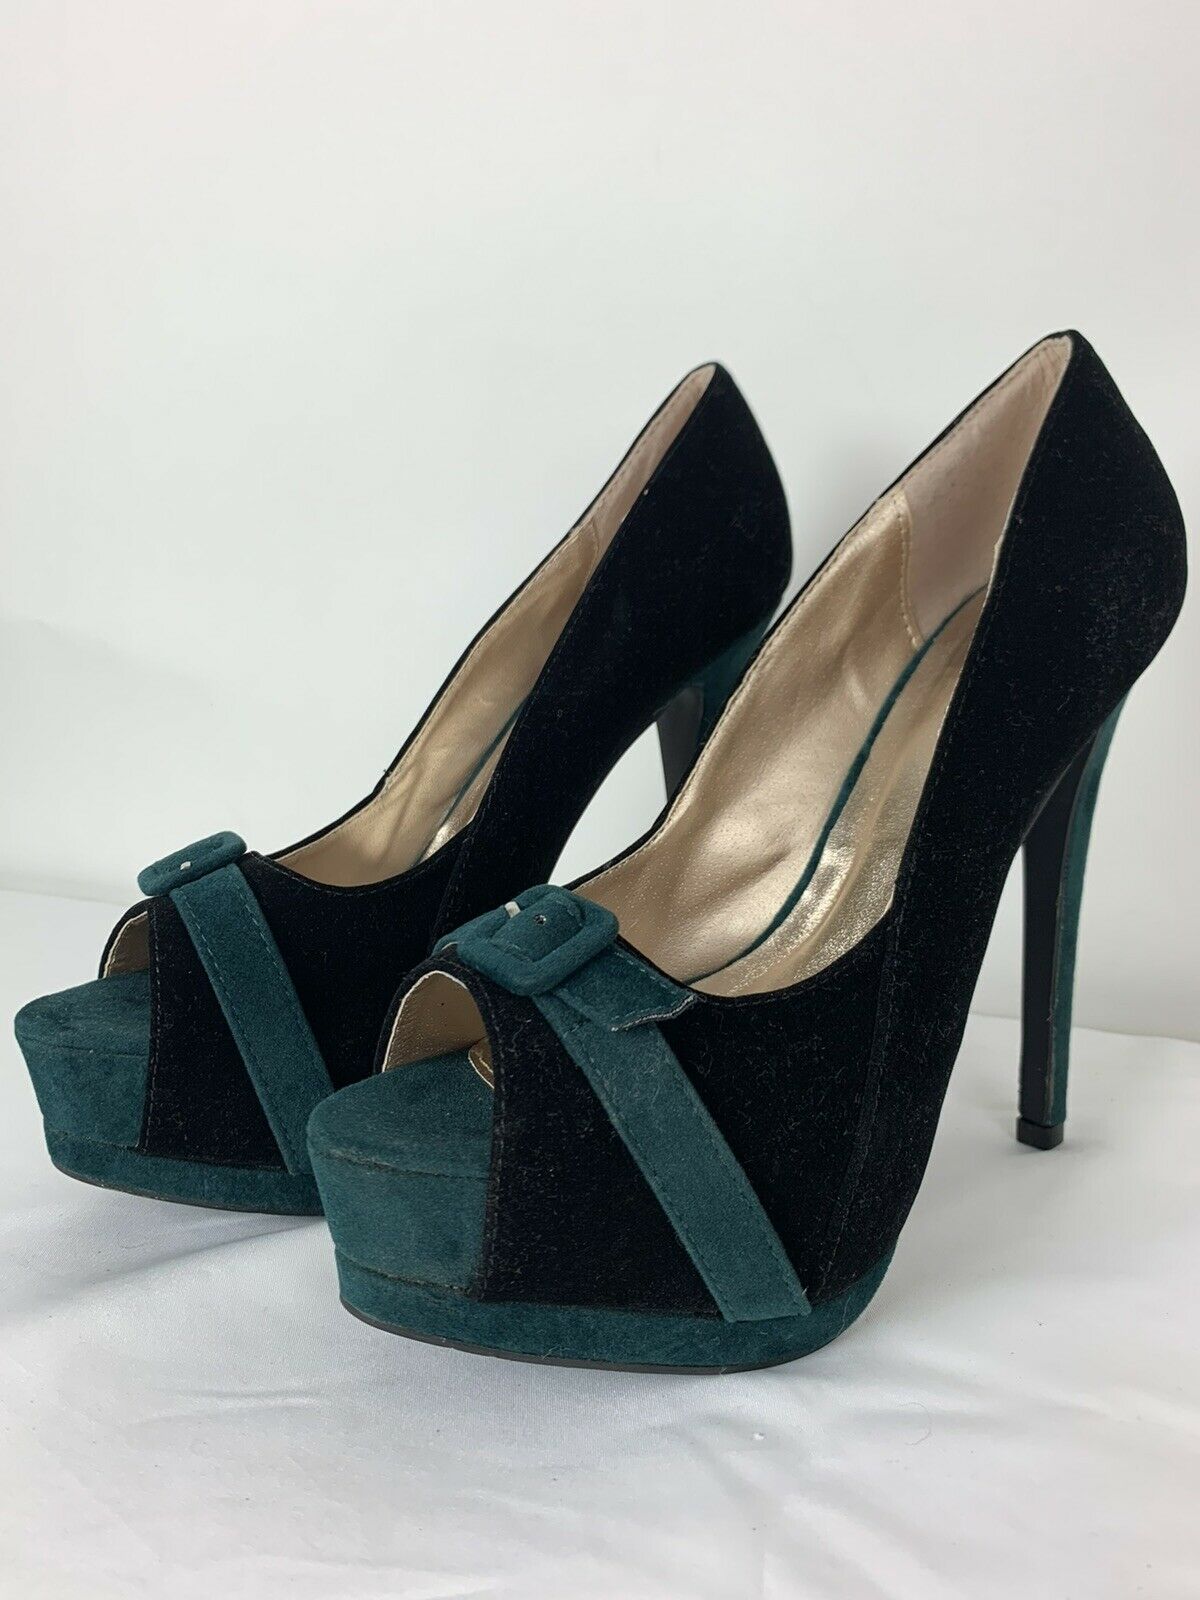 Qupid Platform Pumps Green Black Faux Suede Stiletto High Heels Shoes Size 8